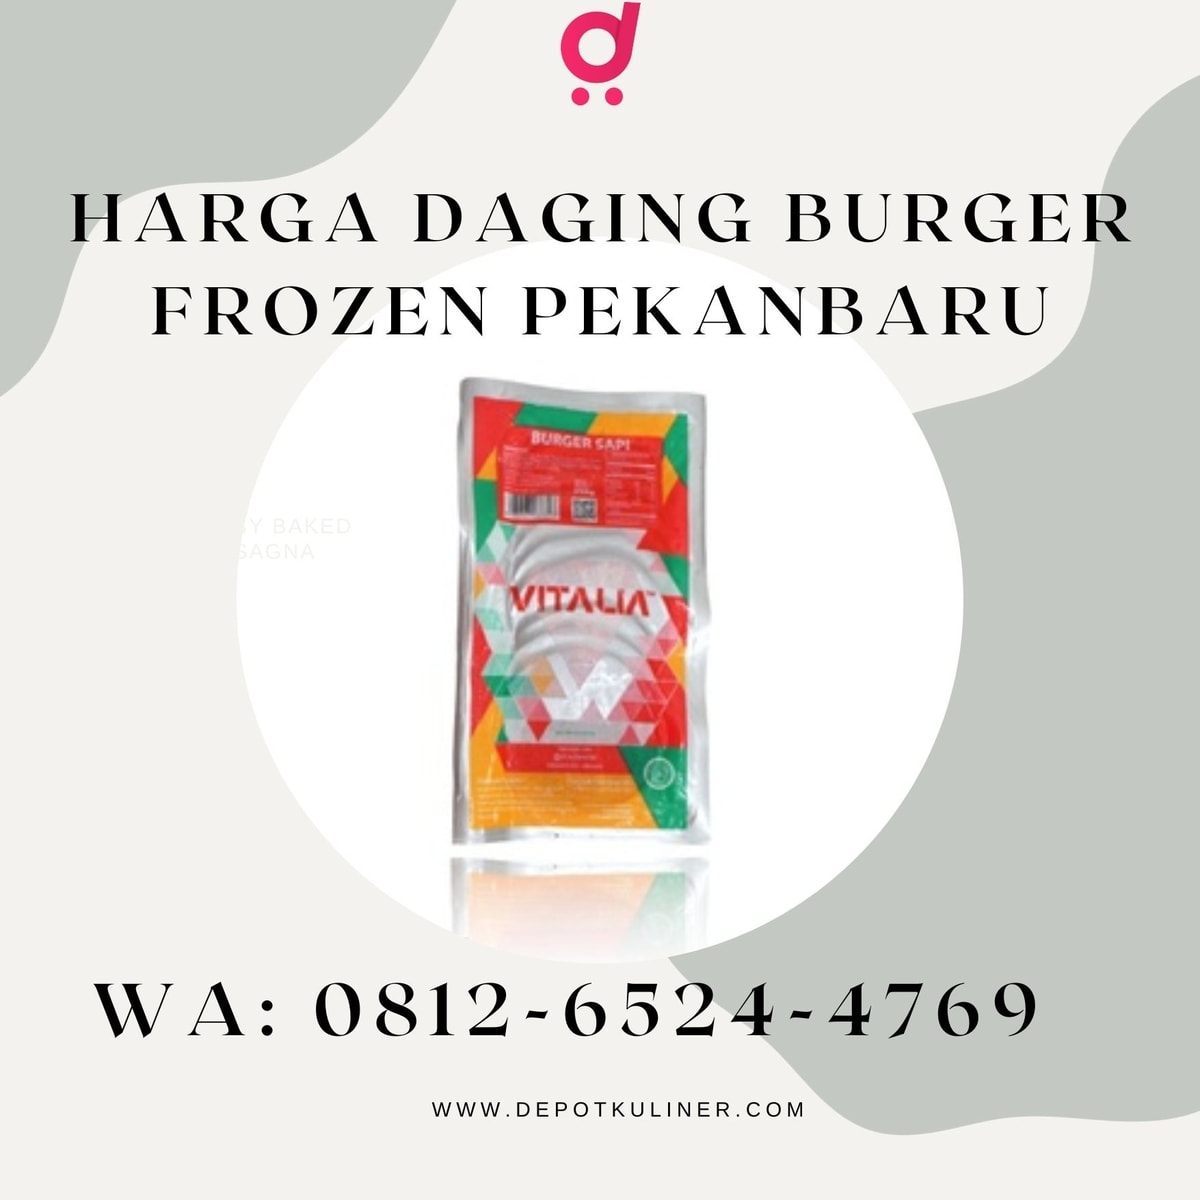 HARGA MURAH, Call 0812-6524-4769, Harga Daging Burger Frozen Pekanbaru